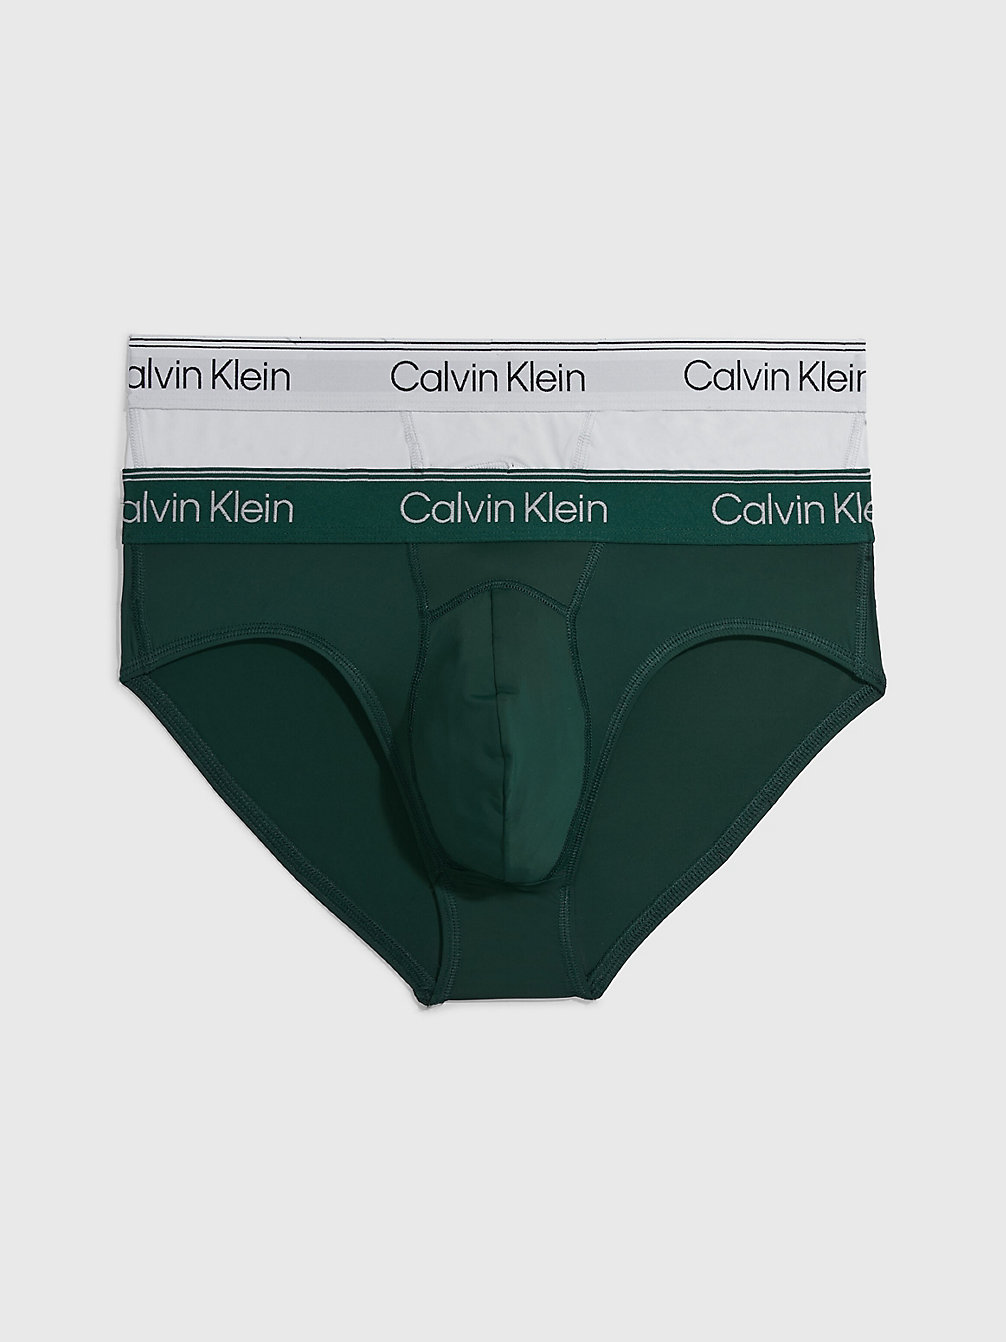 PONDEROSA PINE, GALAXY GREY Lot De 2 Slips - Athletic Micro undefined hommes Calvin Klein